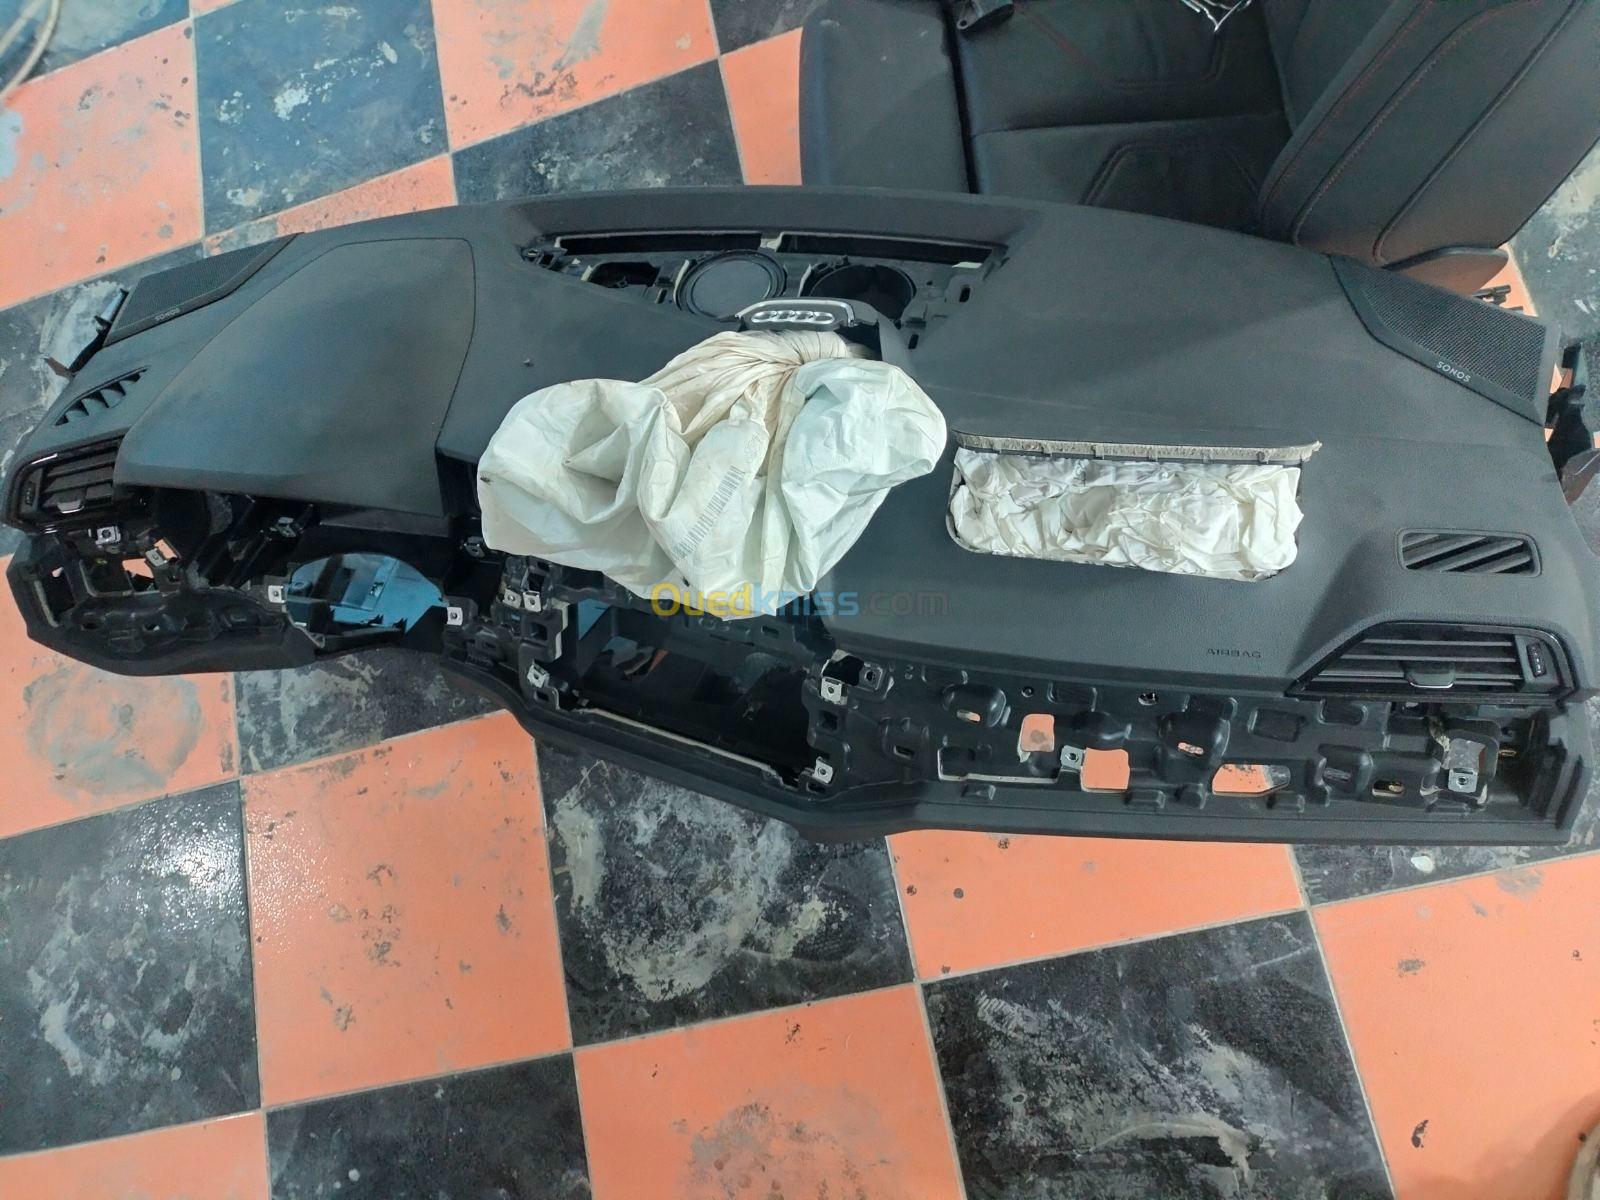 Réparation airbag Alger 